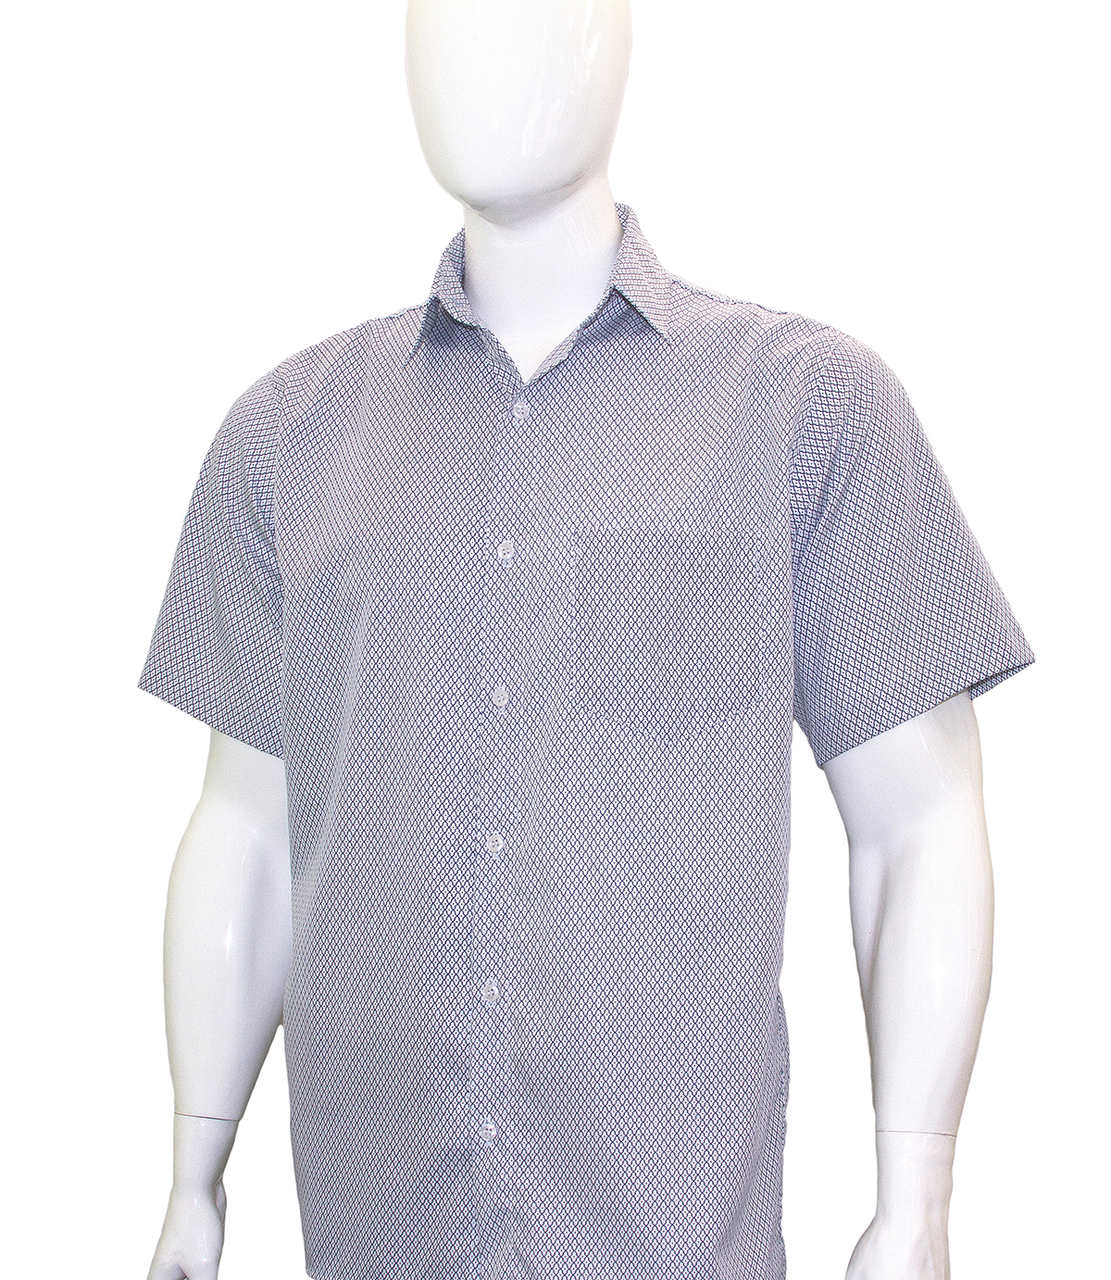 Camisa Social Masculina Manga Curta Estampada Branco/Azul Claro